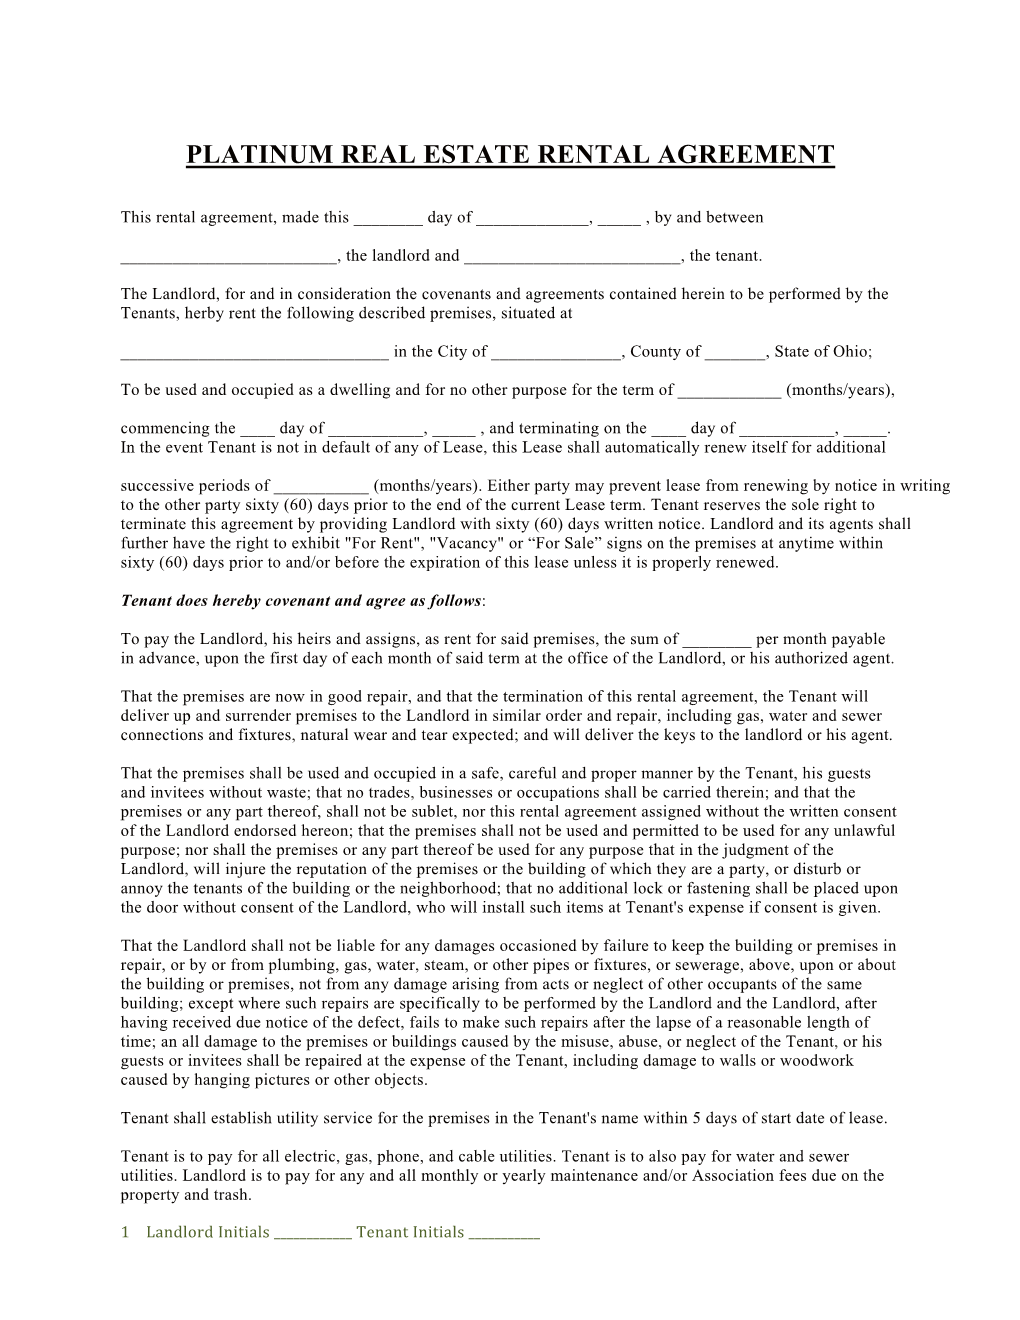 Platinum Real Estate Rental Agreement